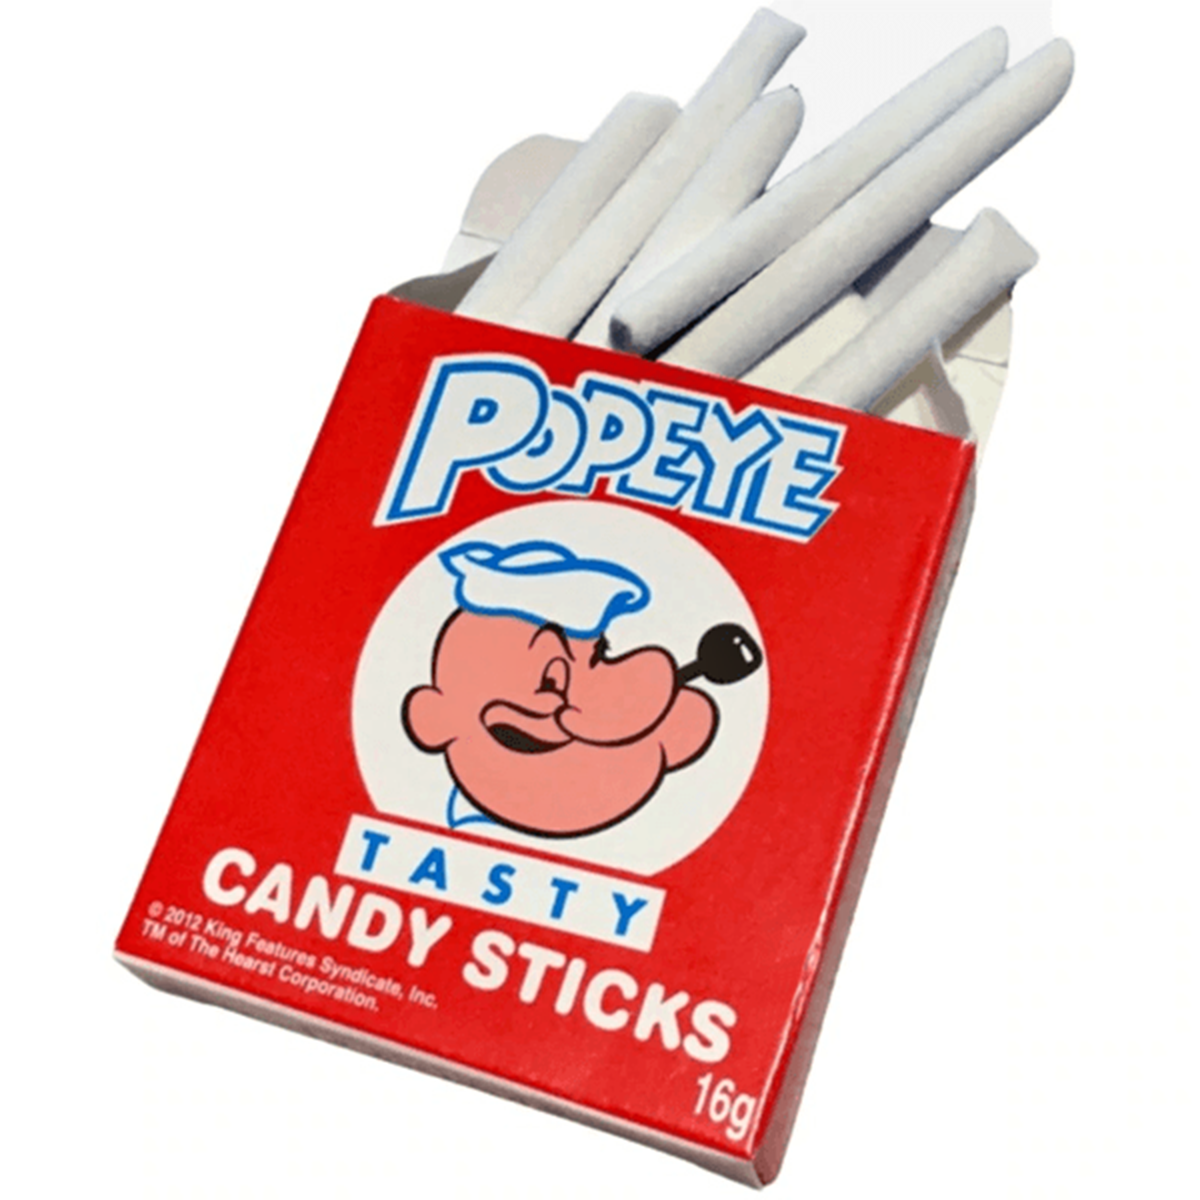 Popeye Candy Sticks